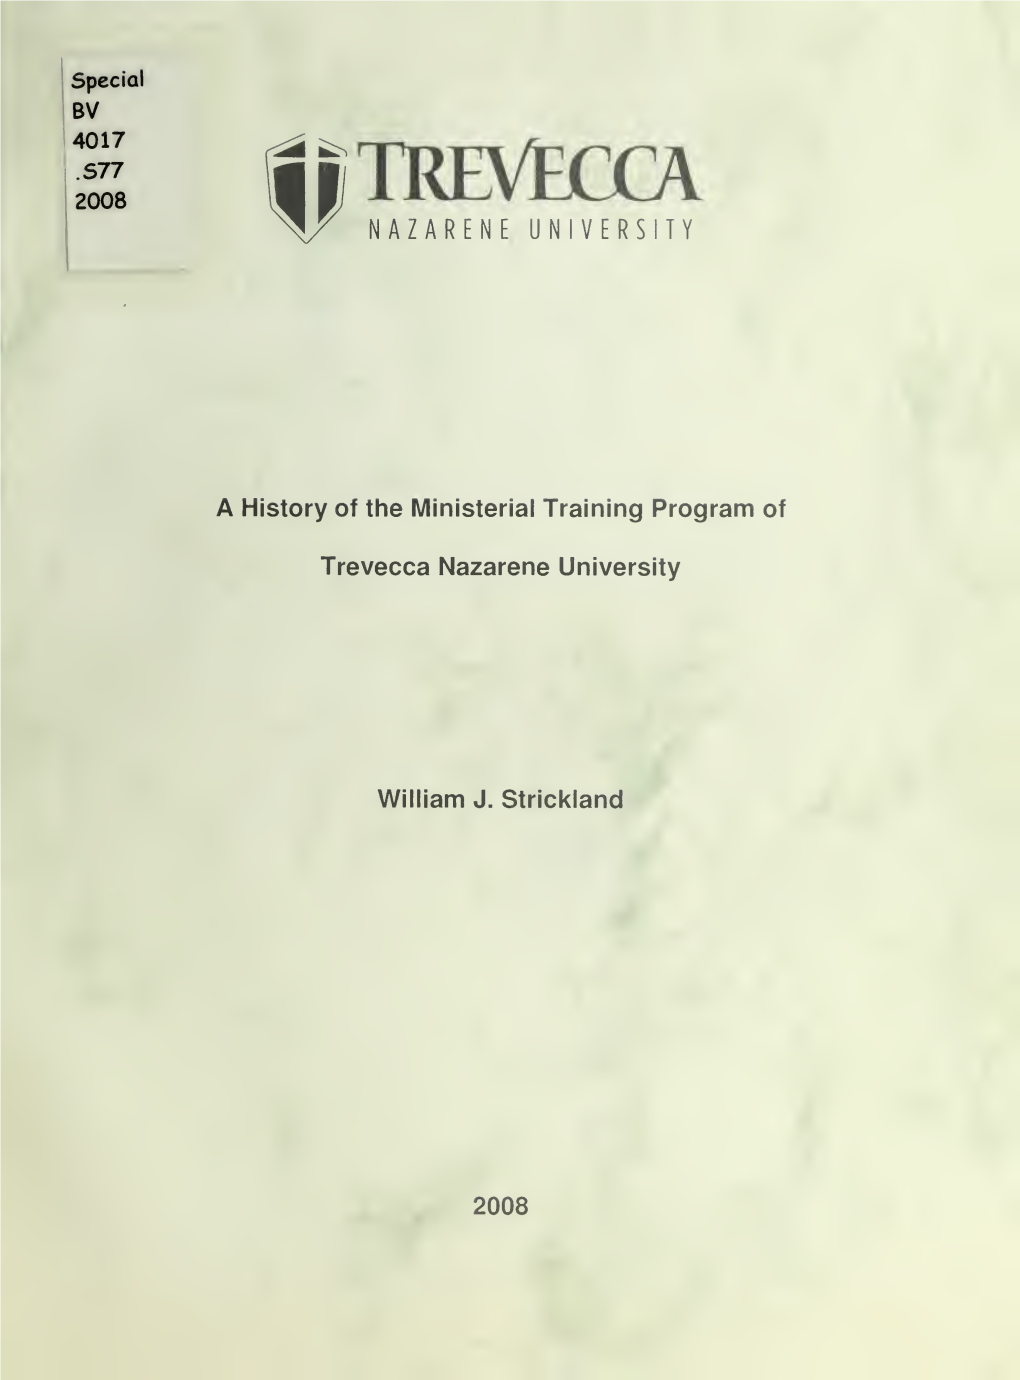 A History of the Ministerial Training Program of Trevecca Nazarene University